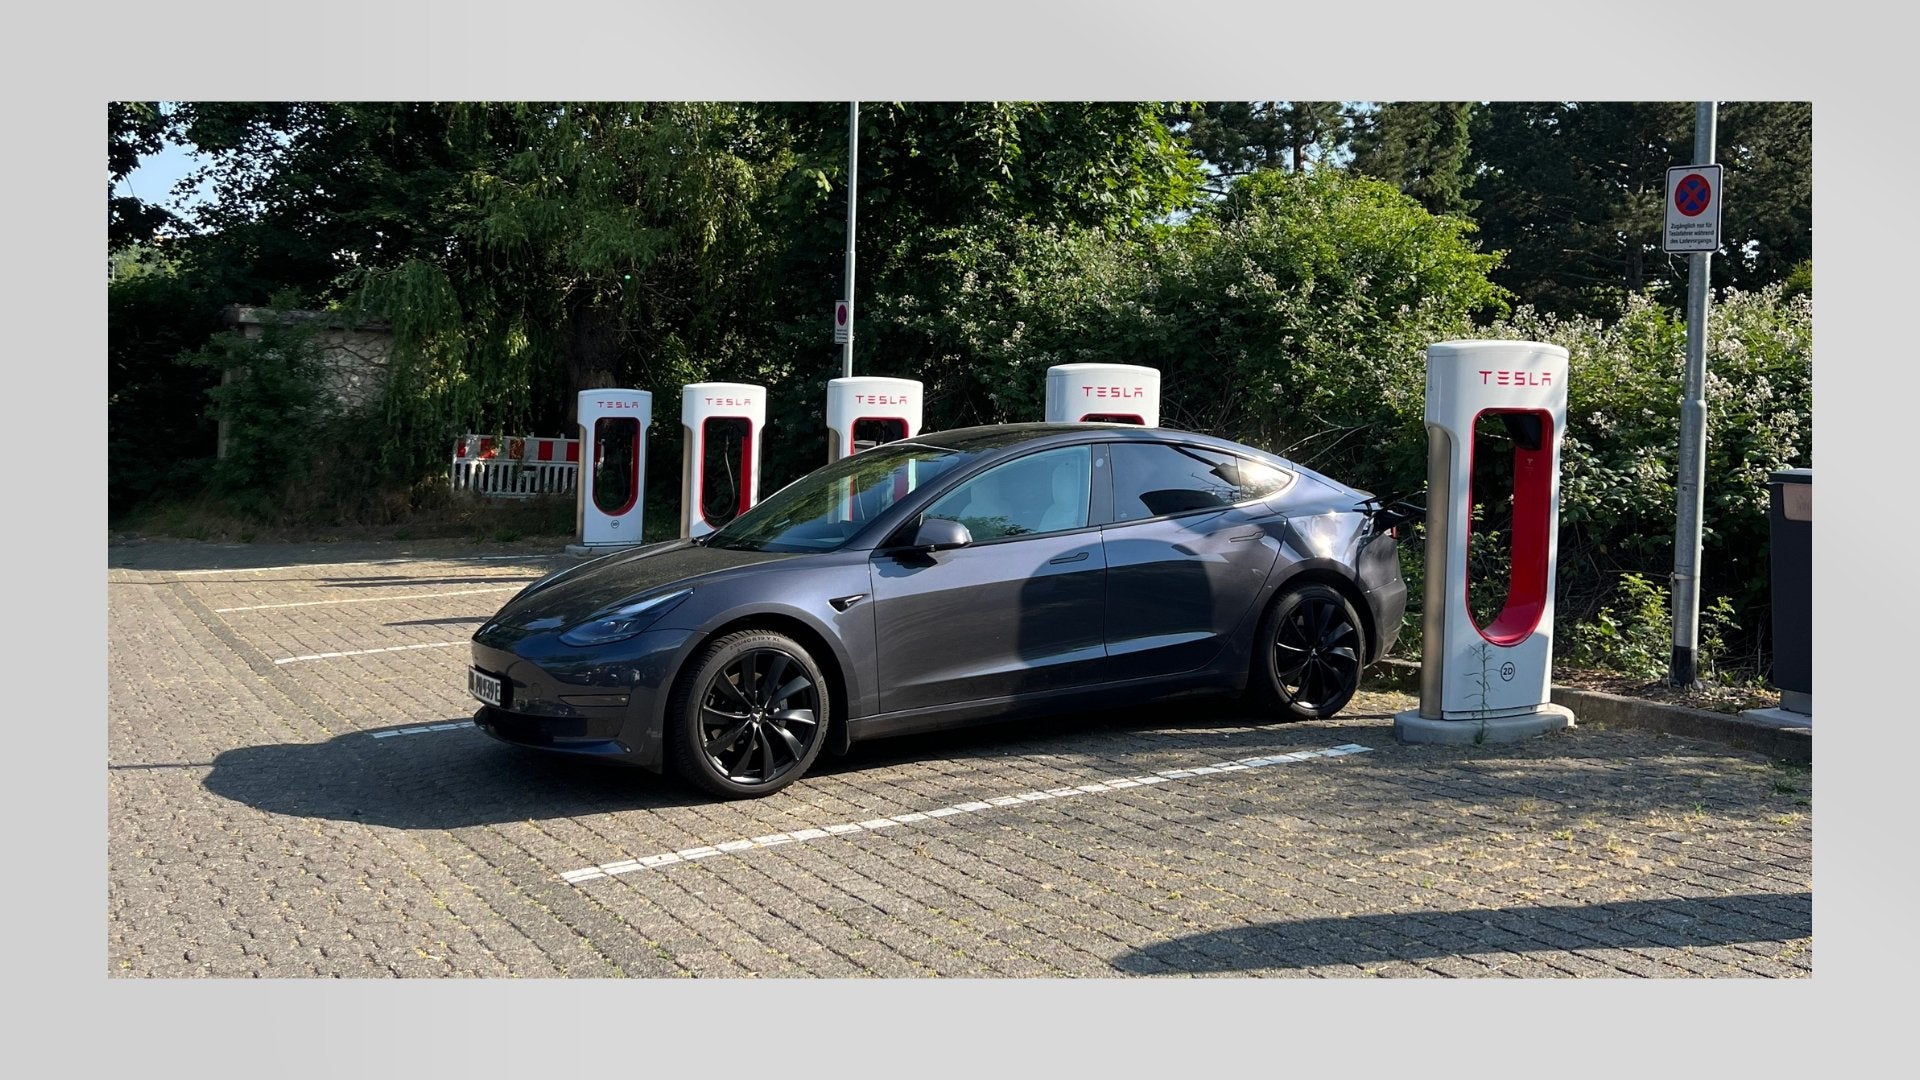 Tesla Quartalsende: Supercharging Freikilometer, Rabatte und Aktionszinsen fürs Tesla Model 3! - Shop4Tesla